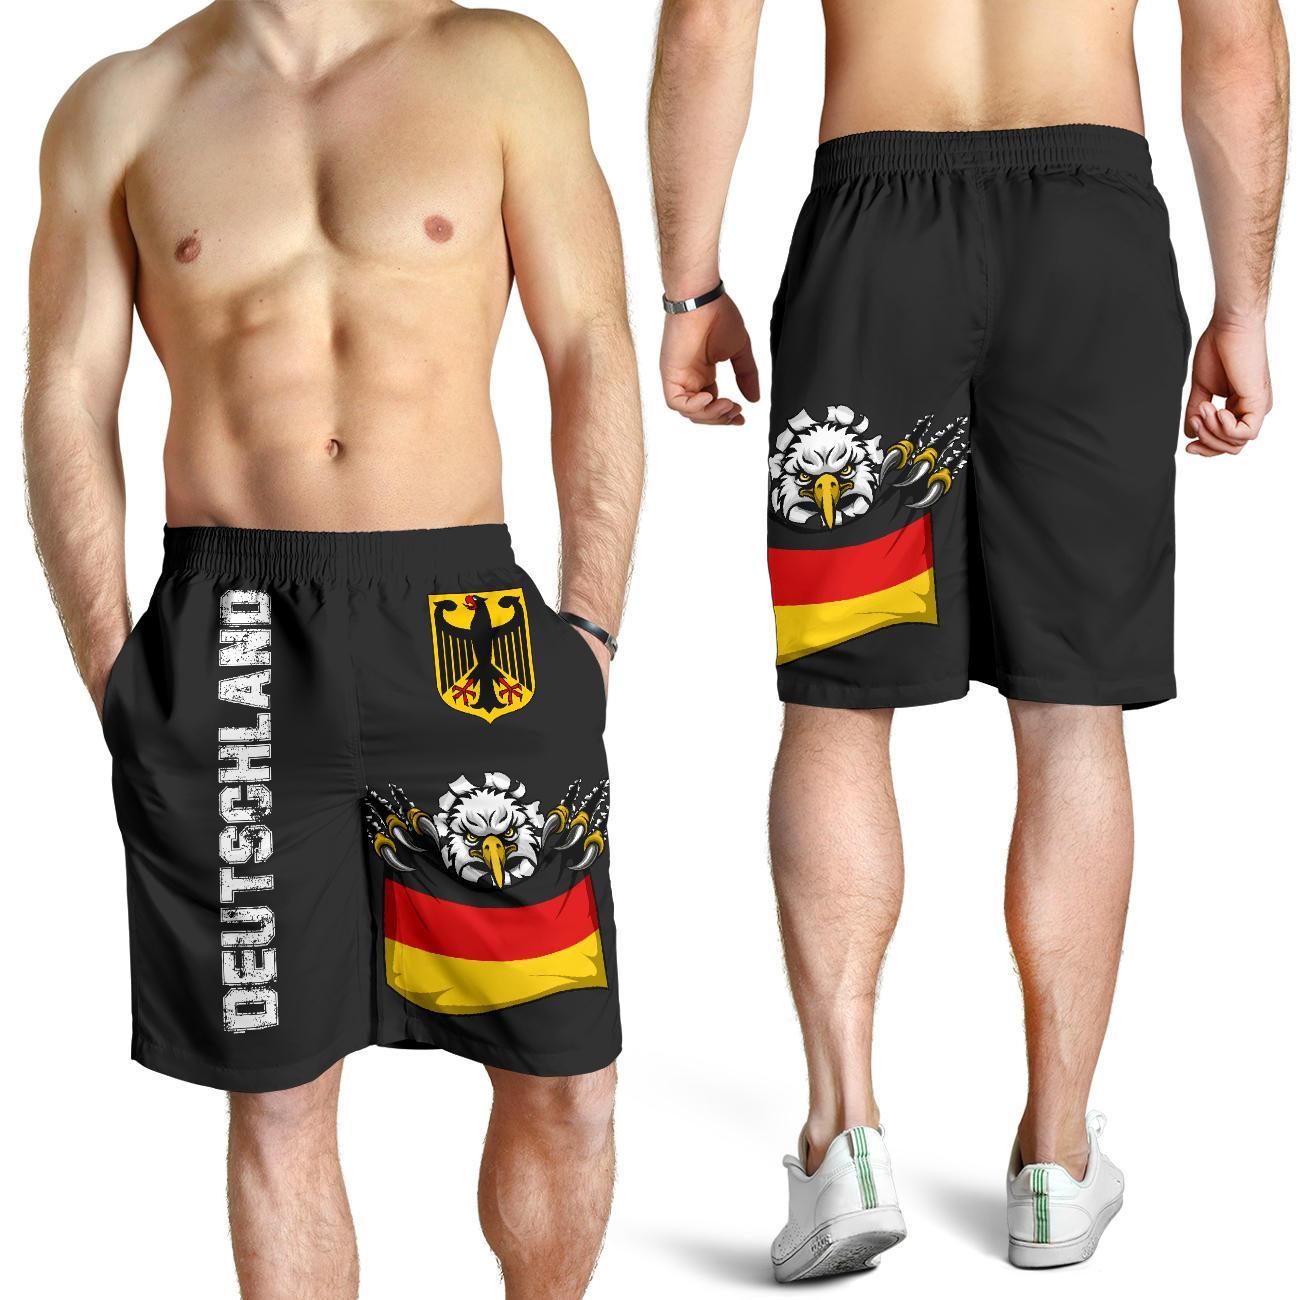 deutschland-germany-shorts-national-eagle